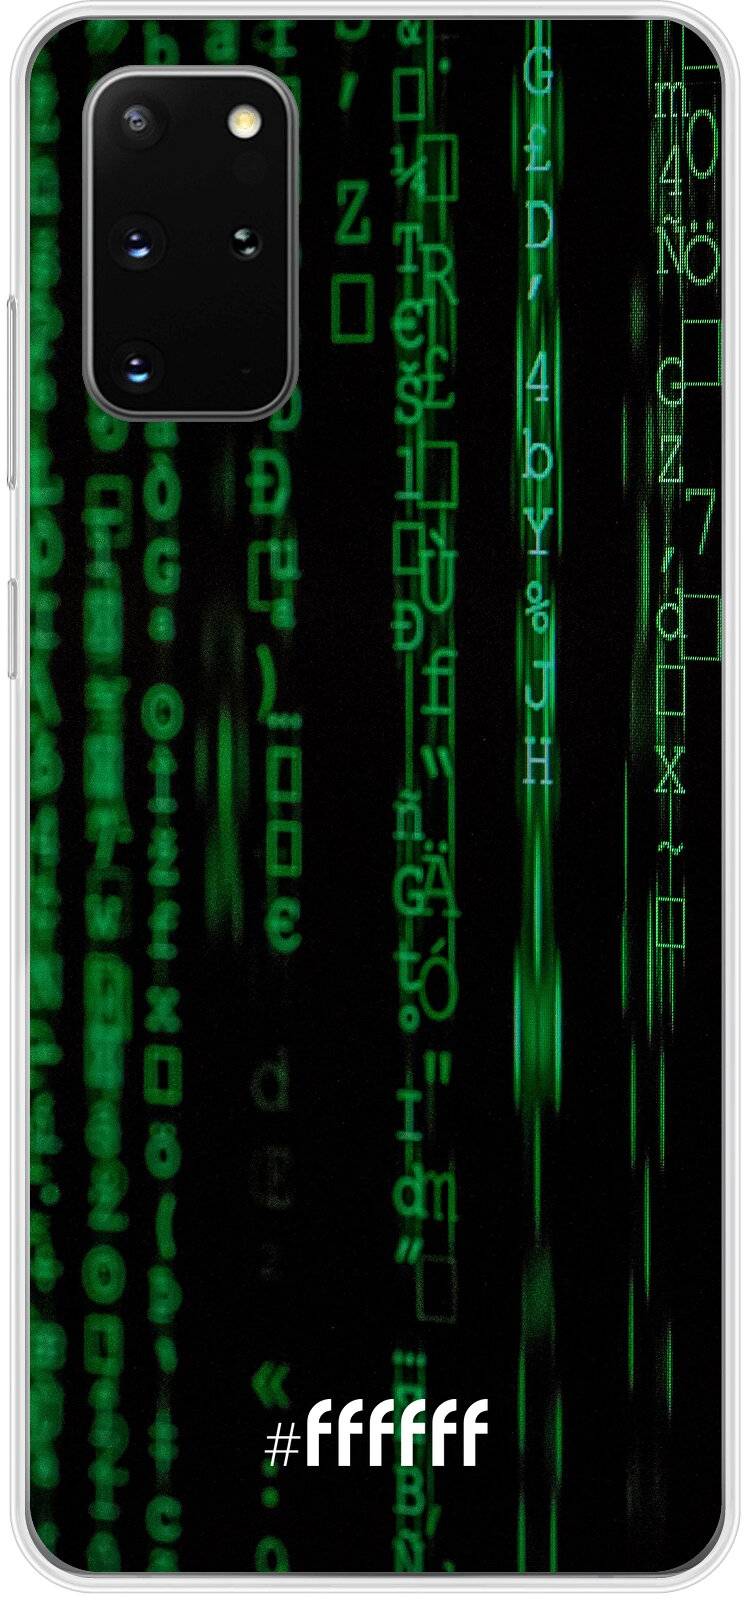 Hacking The Matrix Galaxy S20+